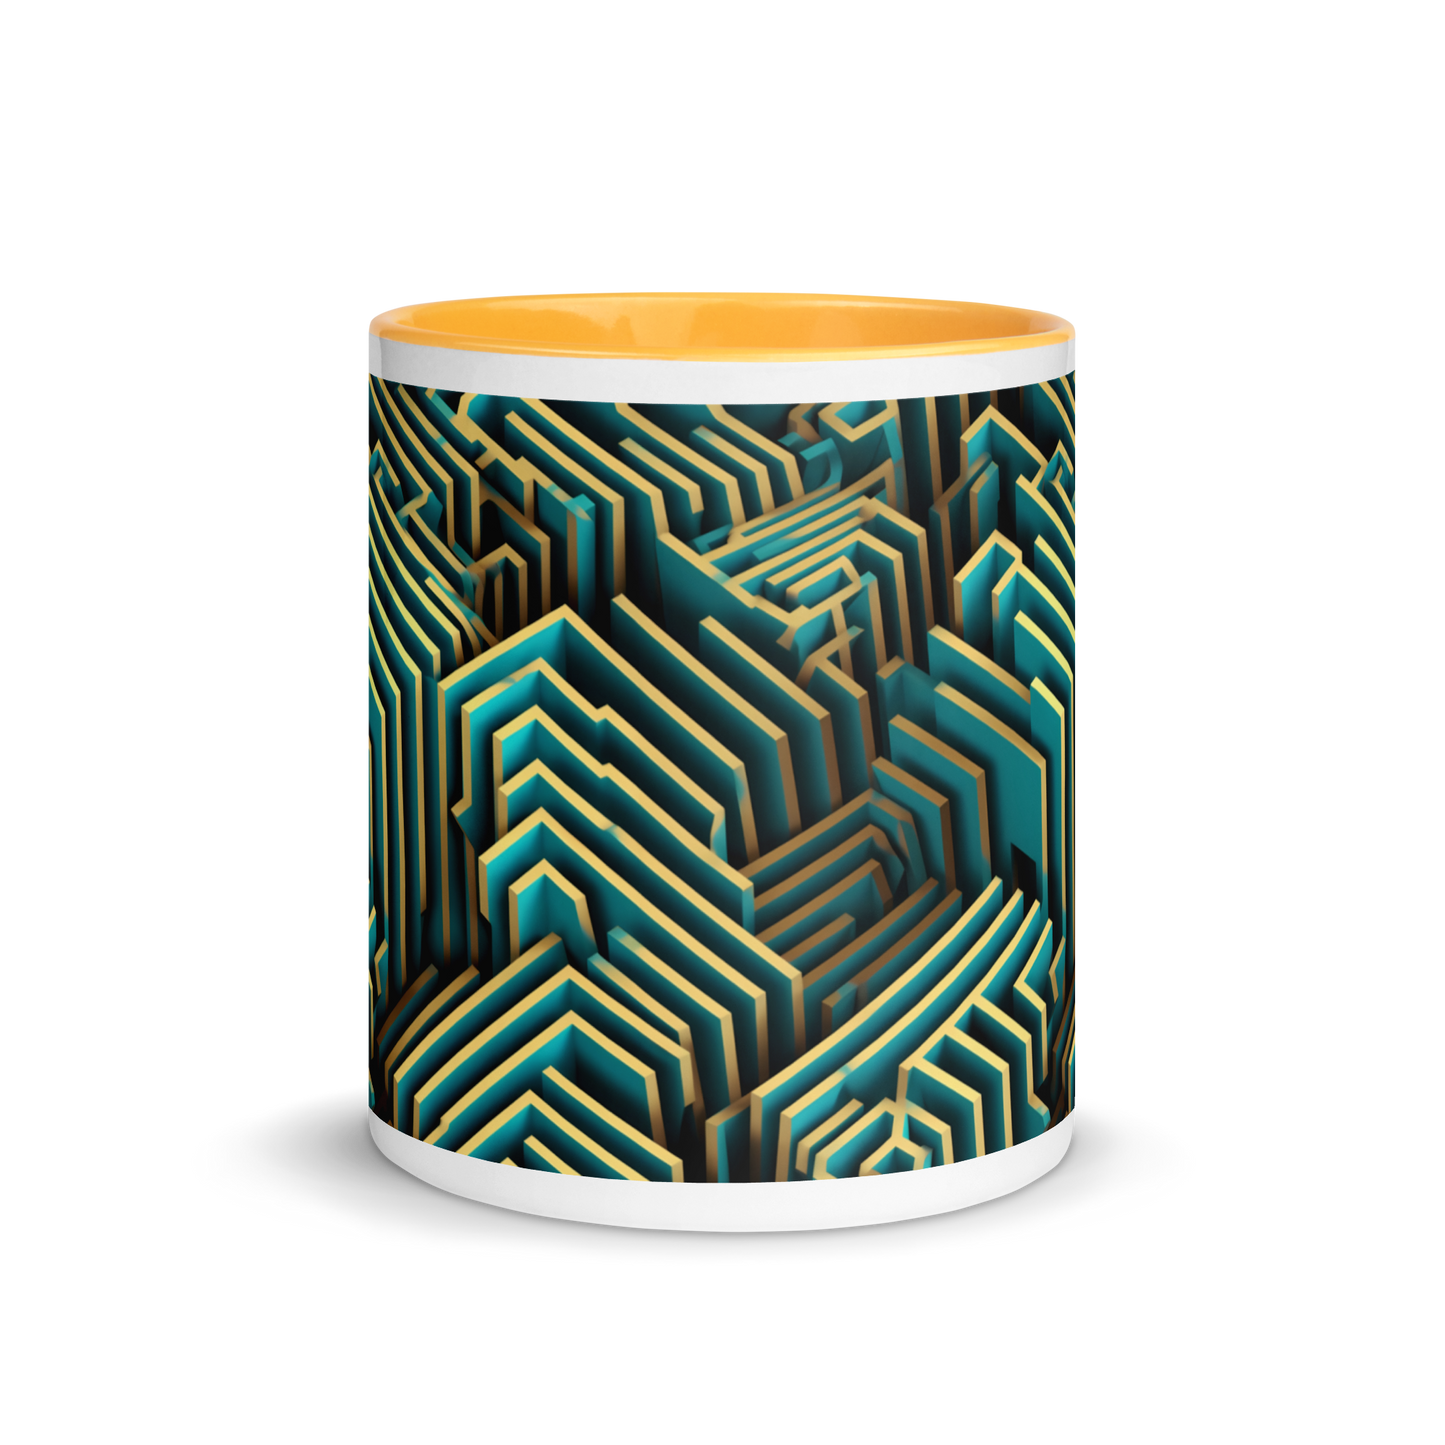 3D Maze Illusion | 3D Patterns | White Ceramic Mug with Color Inside - #5